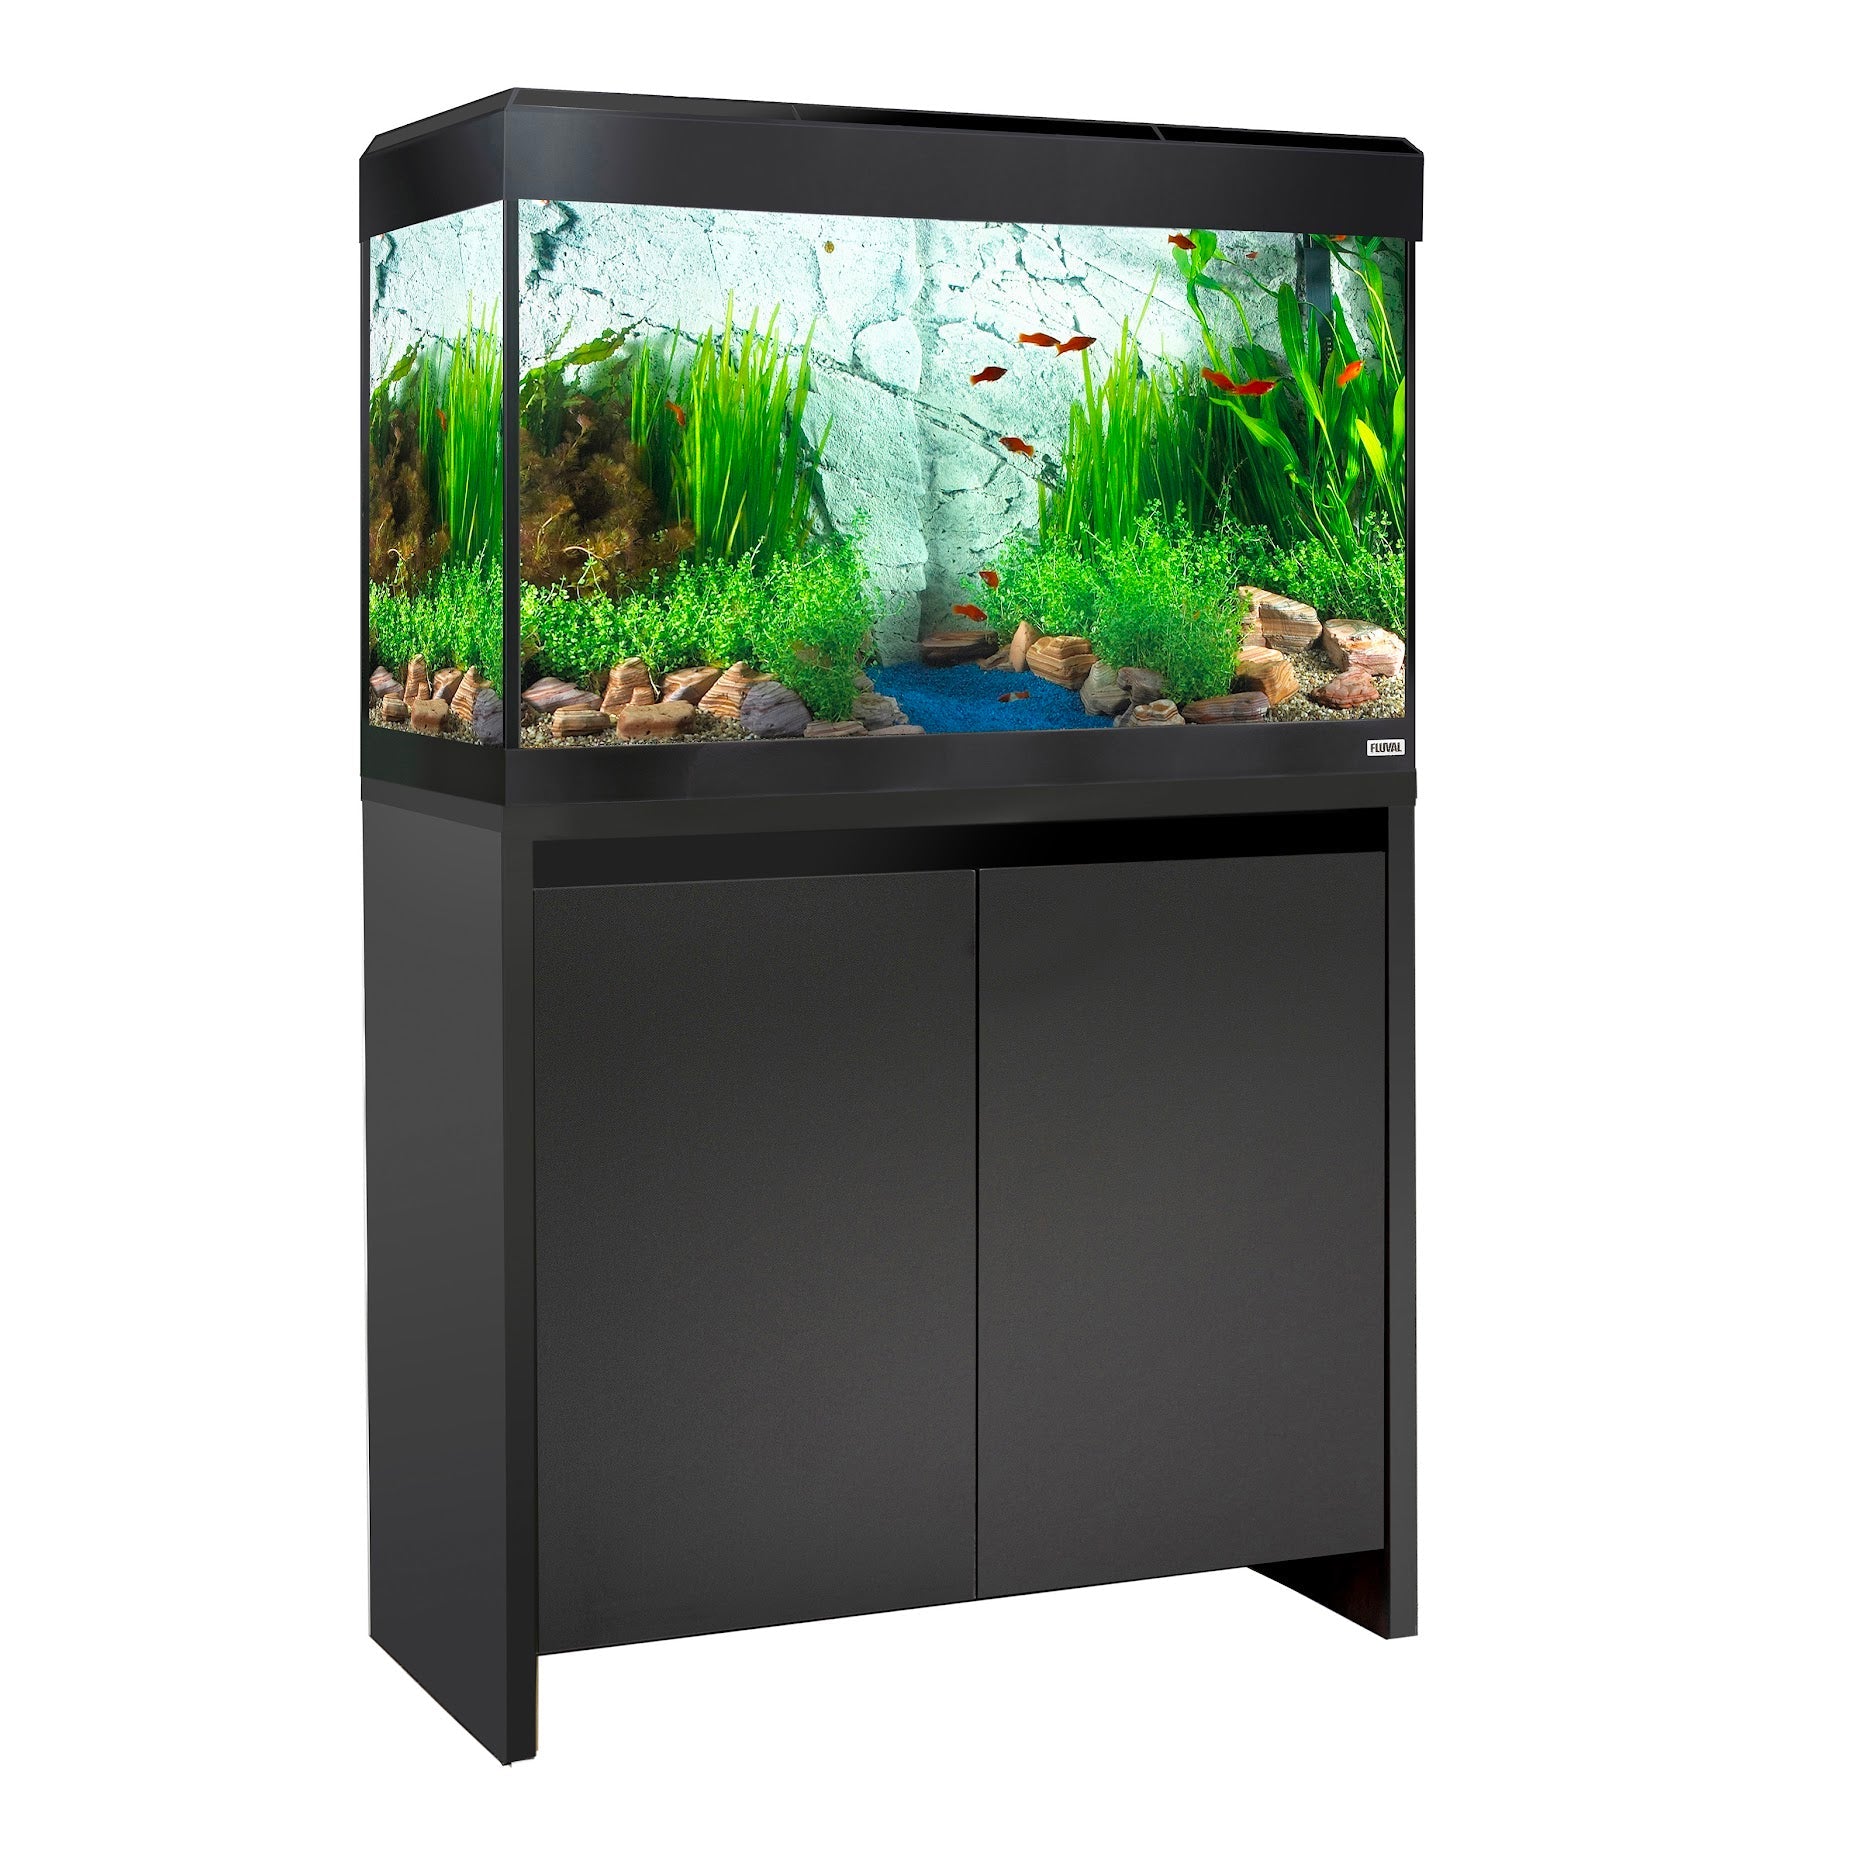 Fluval Roma Bluetooth LED 125 Aquarium and Cabinet - Black - Charterhouse Aquatics